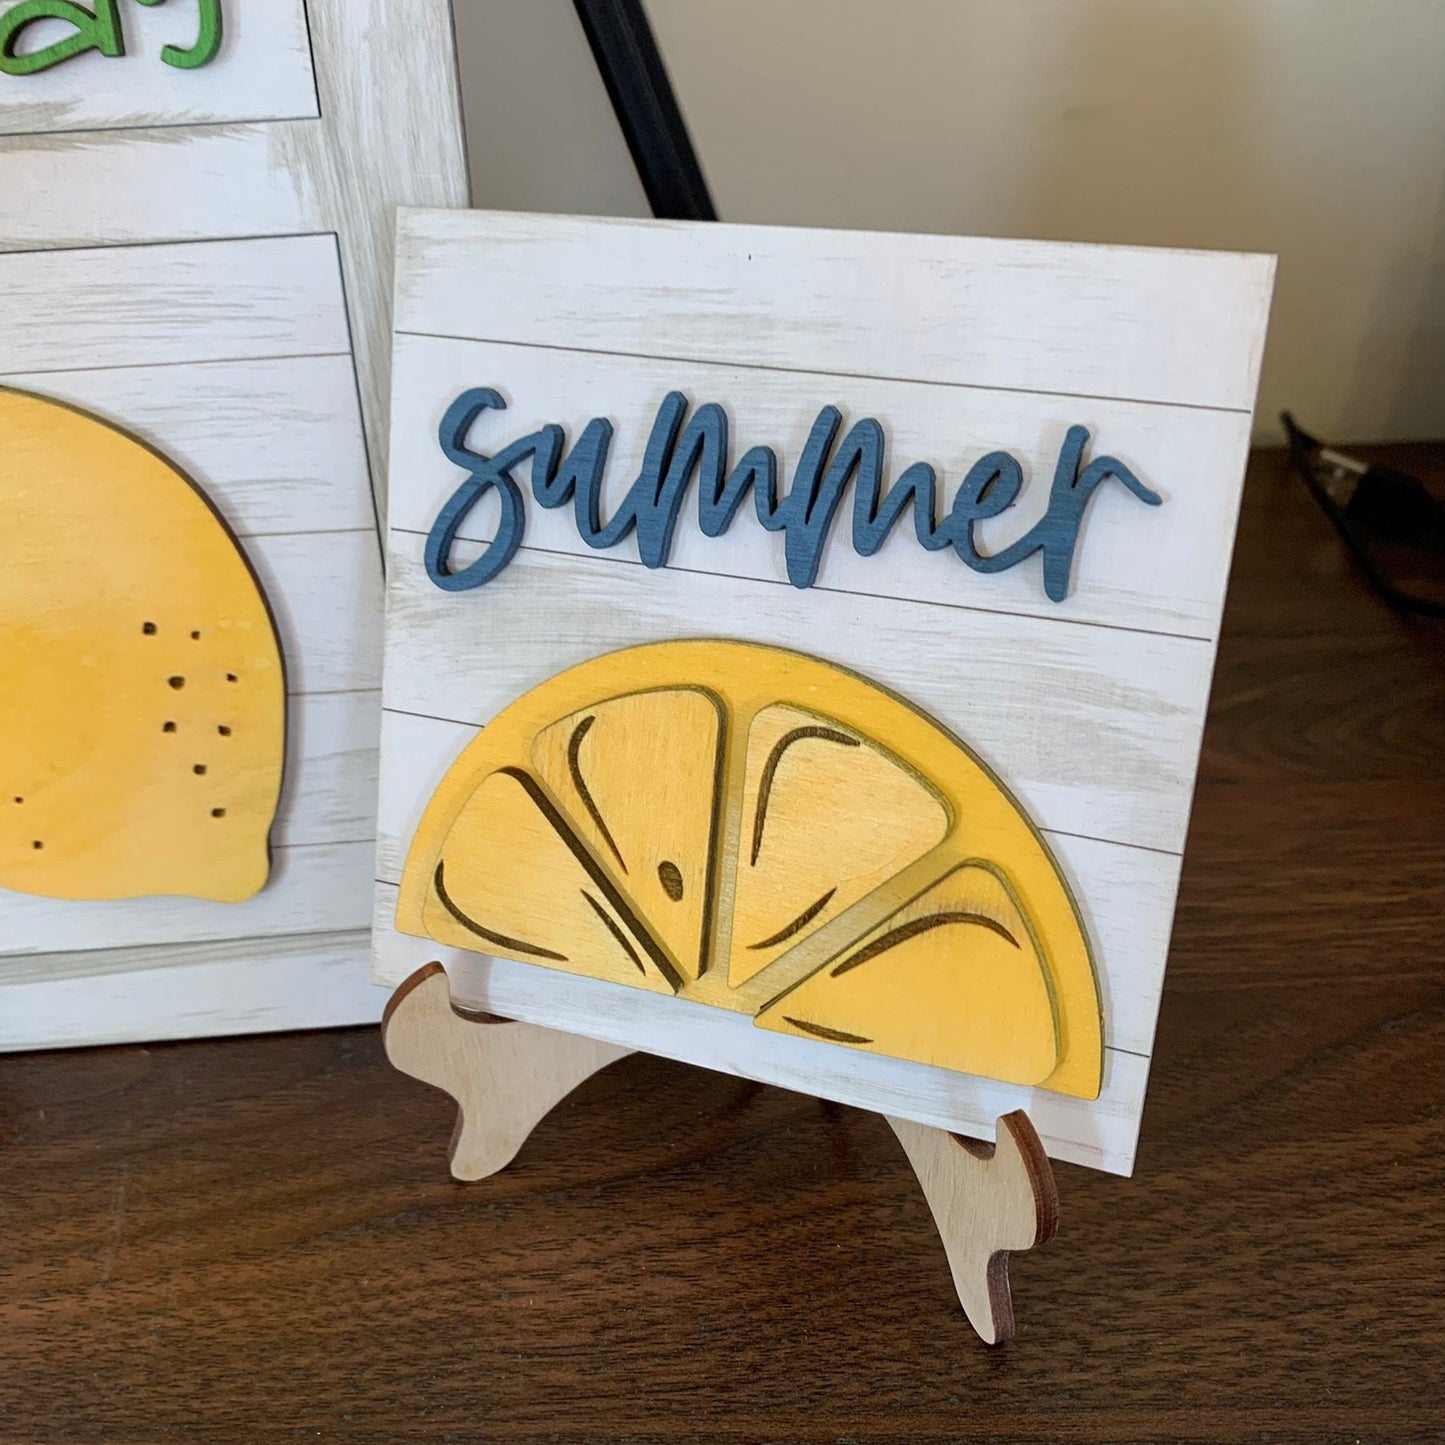 Summer Lemons Interchangeable Signs - Laser Cut Wood Painted